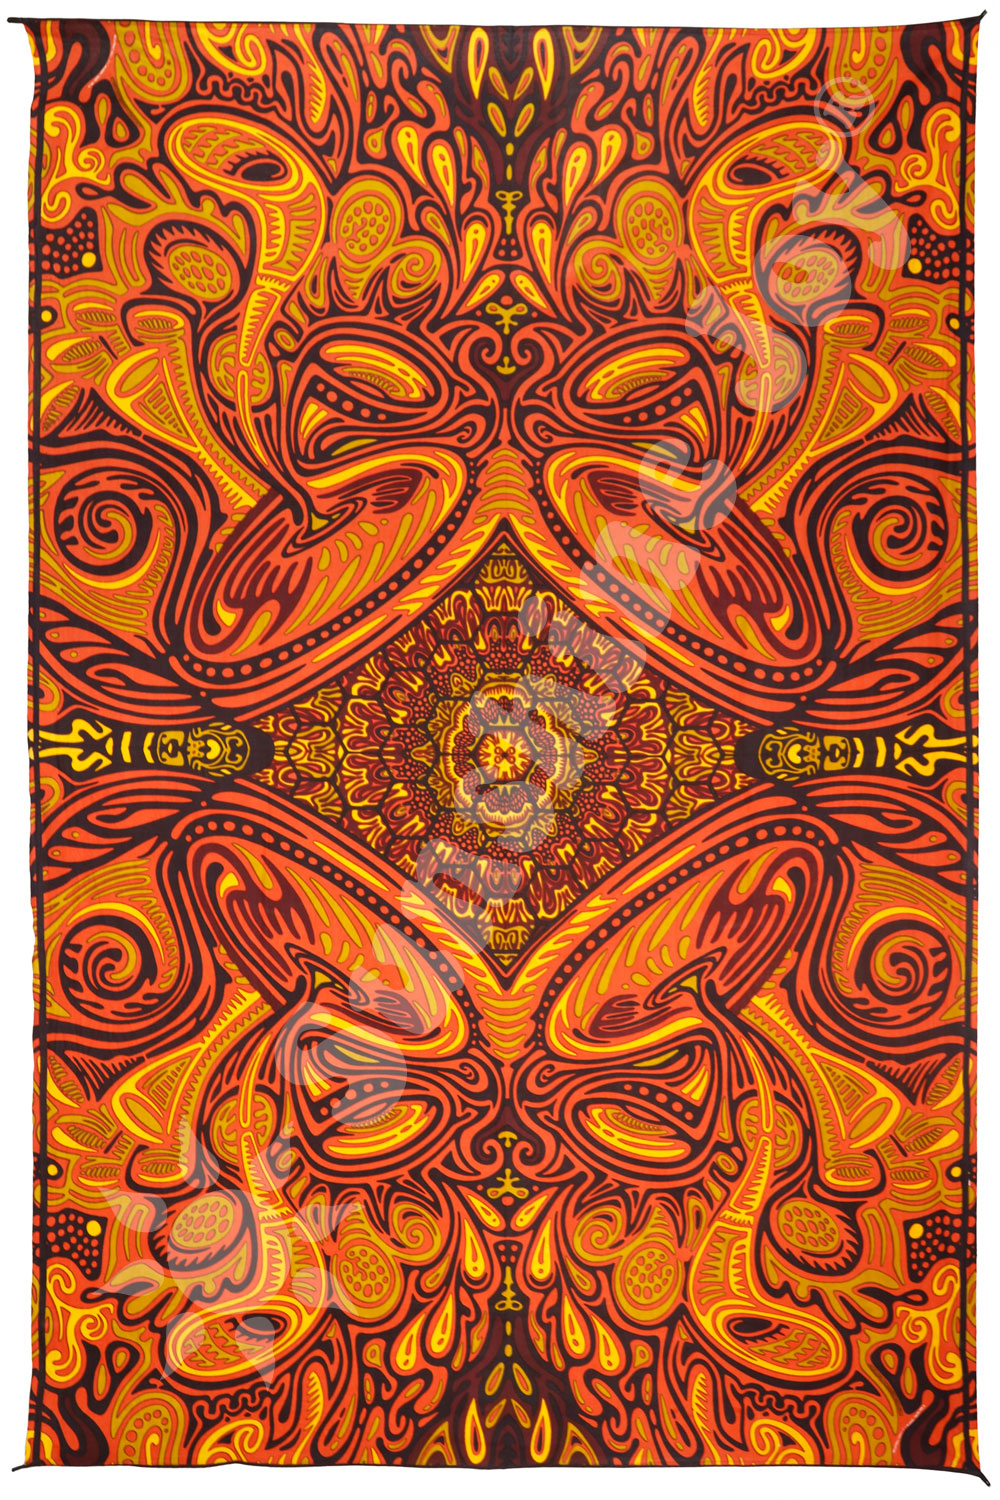 Honey Hive Tapestry 60x90 - Artwork by Chris Pinkerton